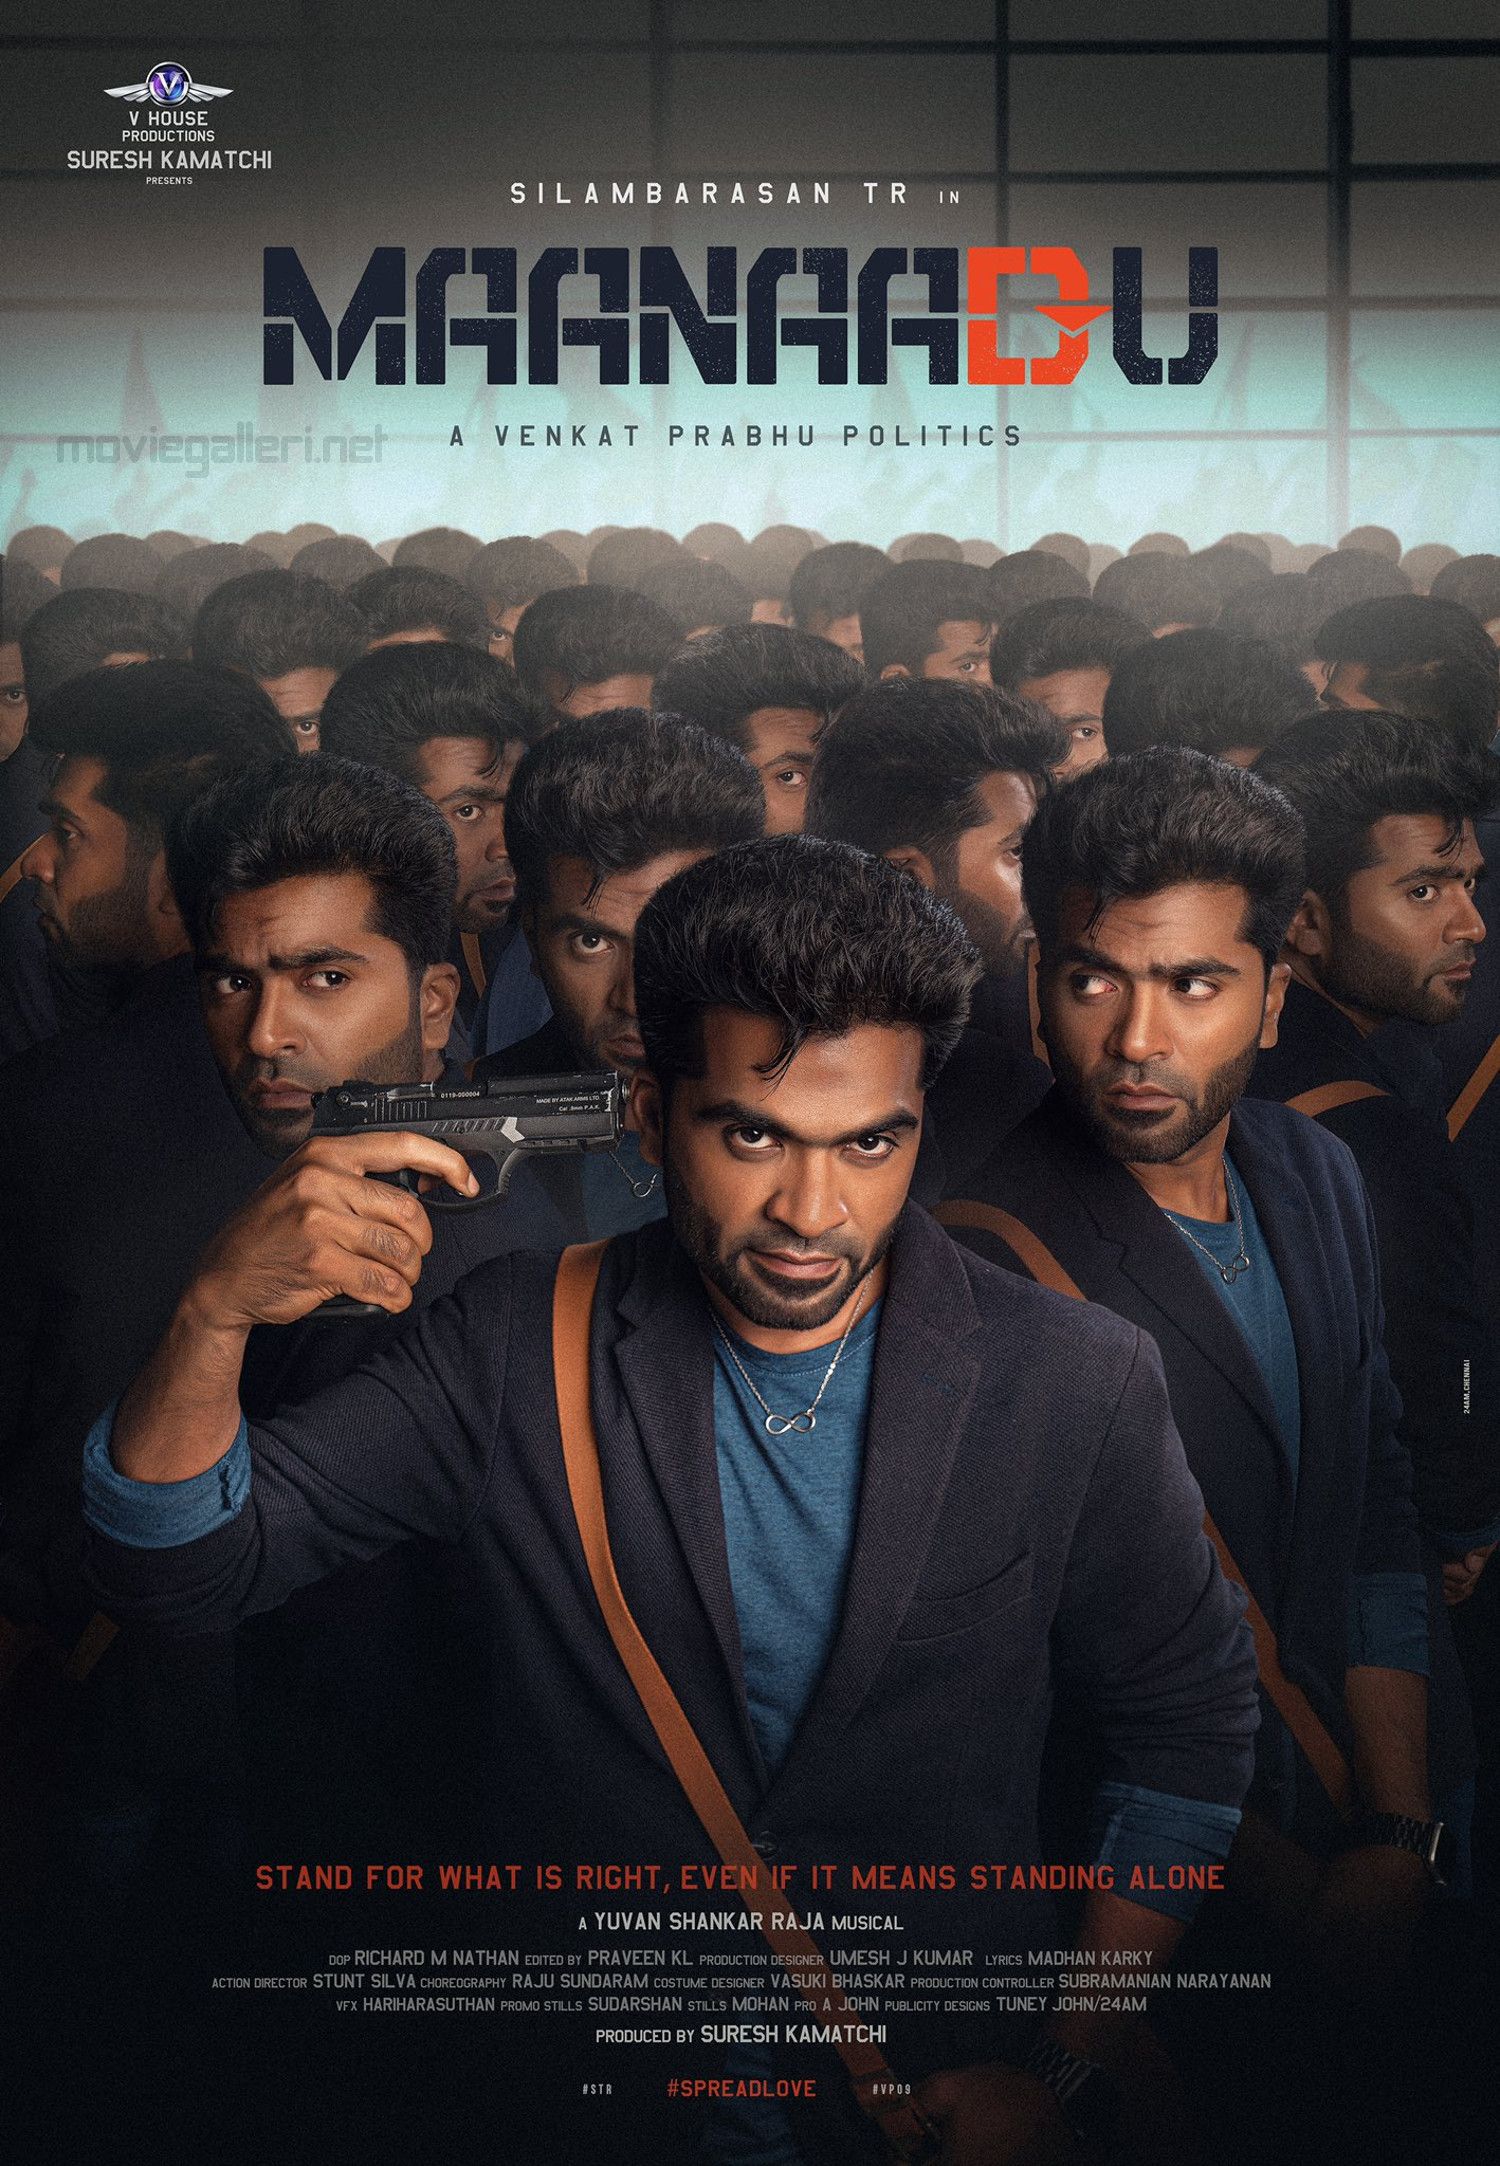 Silambarasan Maanadu Movie First Look Poster HD. New Movie Posters